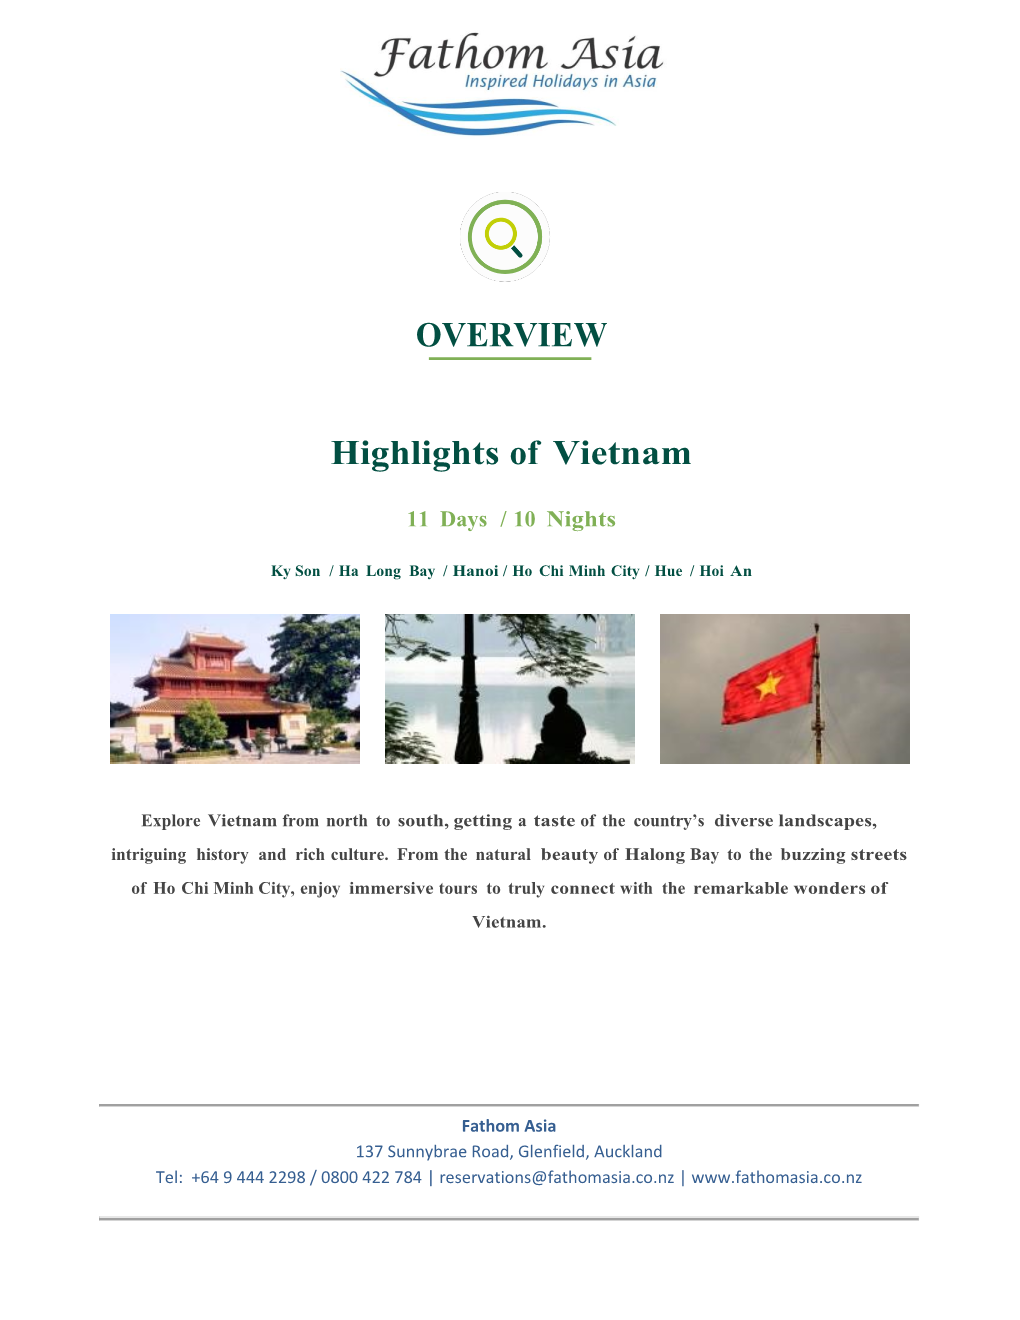 OVERVIEW Highlights of Vietnam